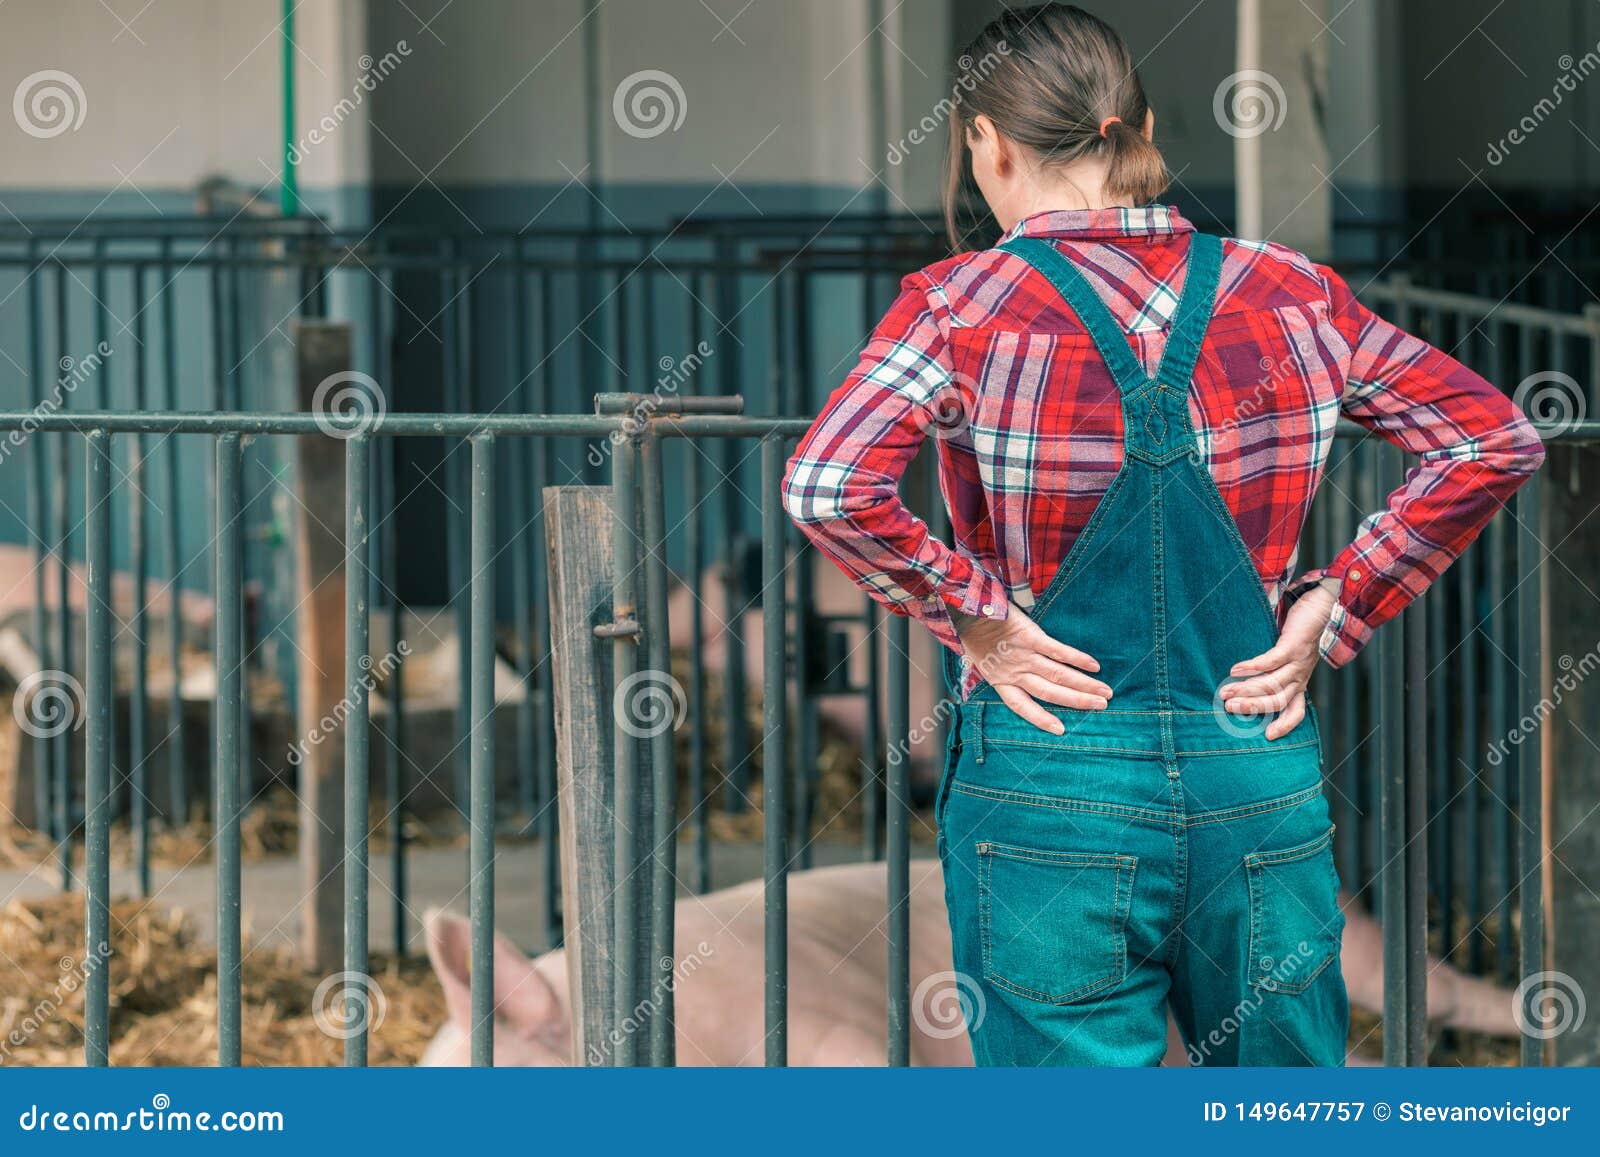 farmer on pig raising and breeding farm